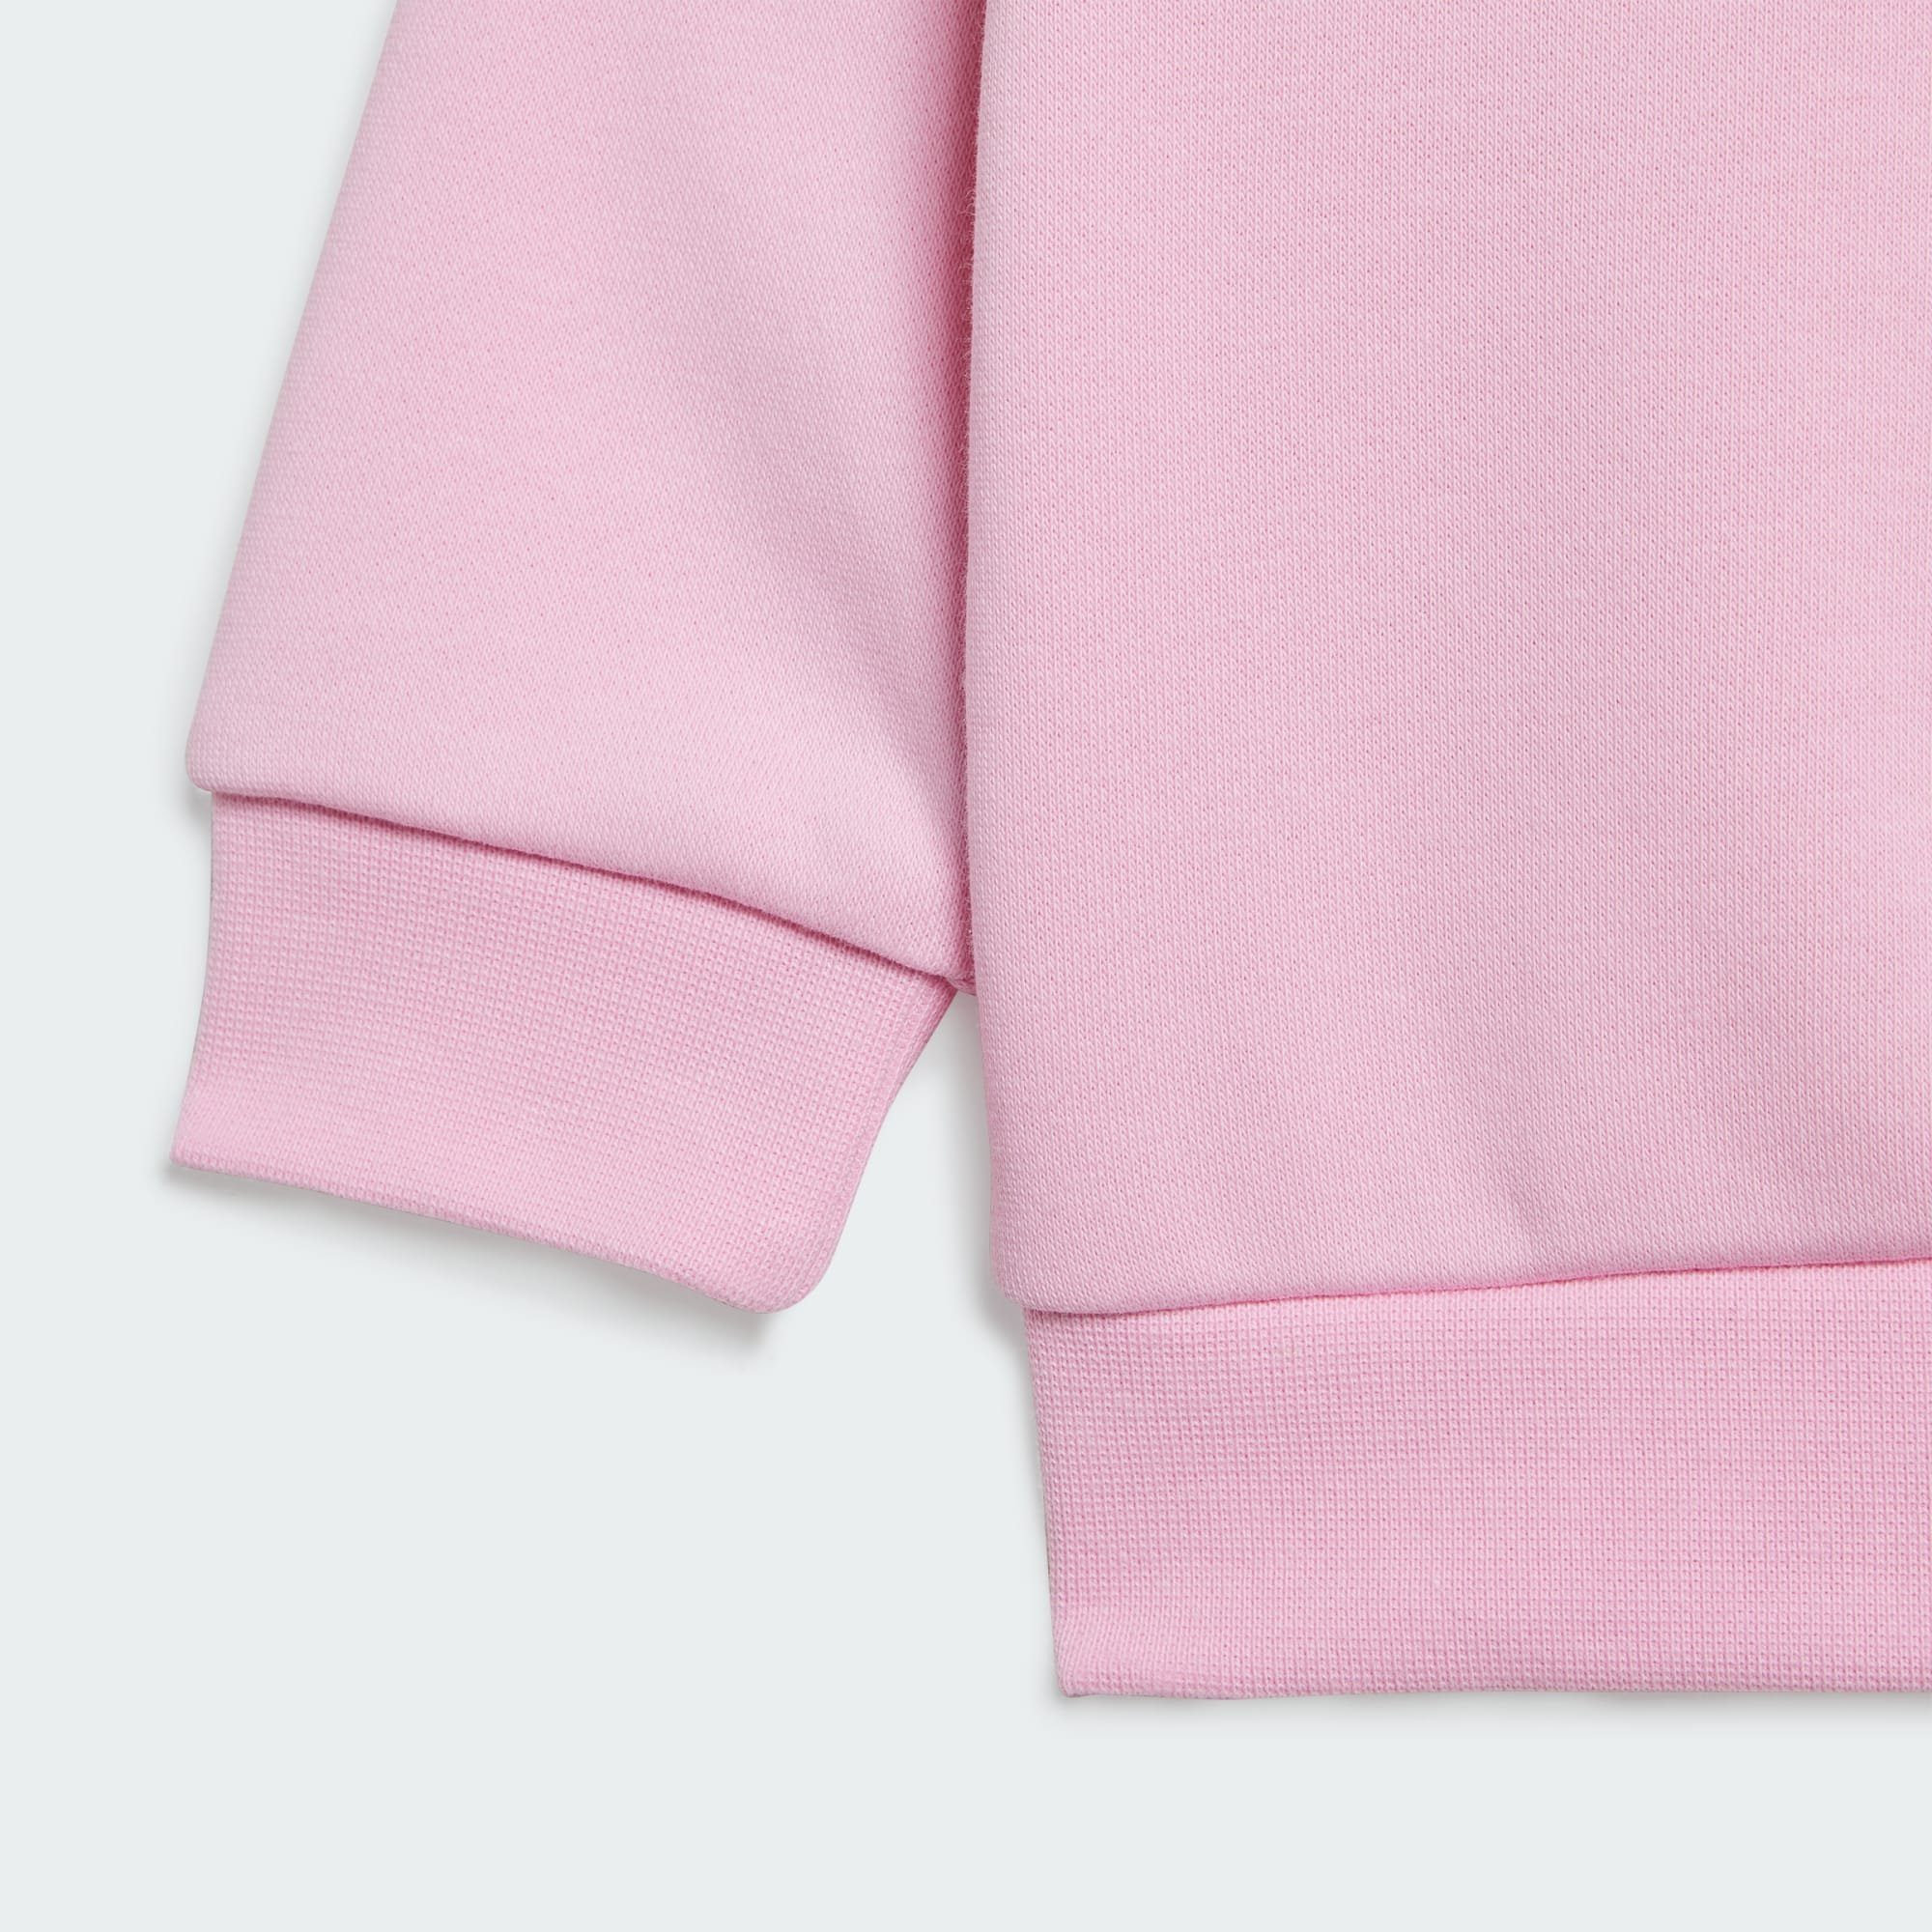 adidas Originals Trainingsanzug ADICOLOR SET True Pink